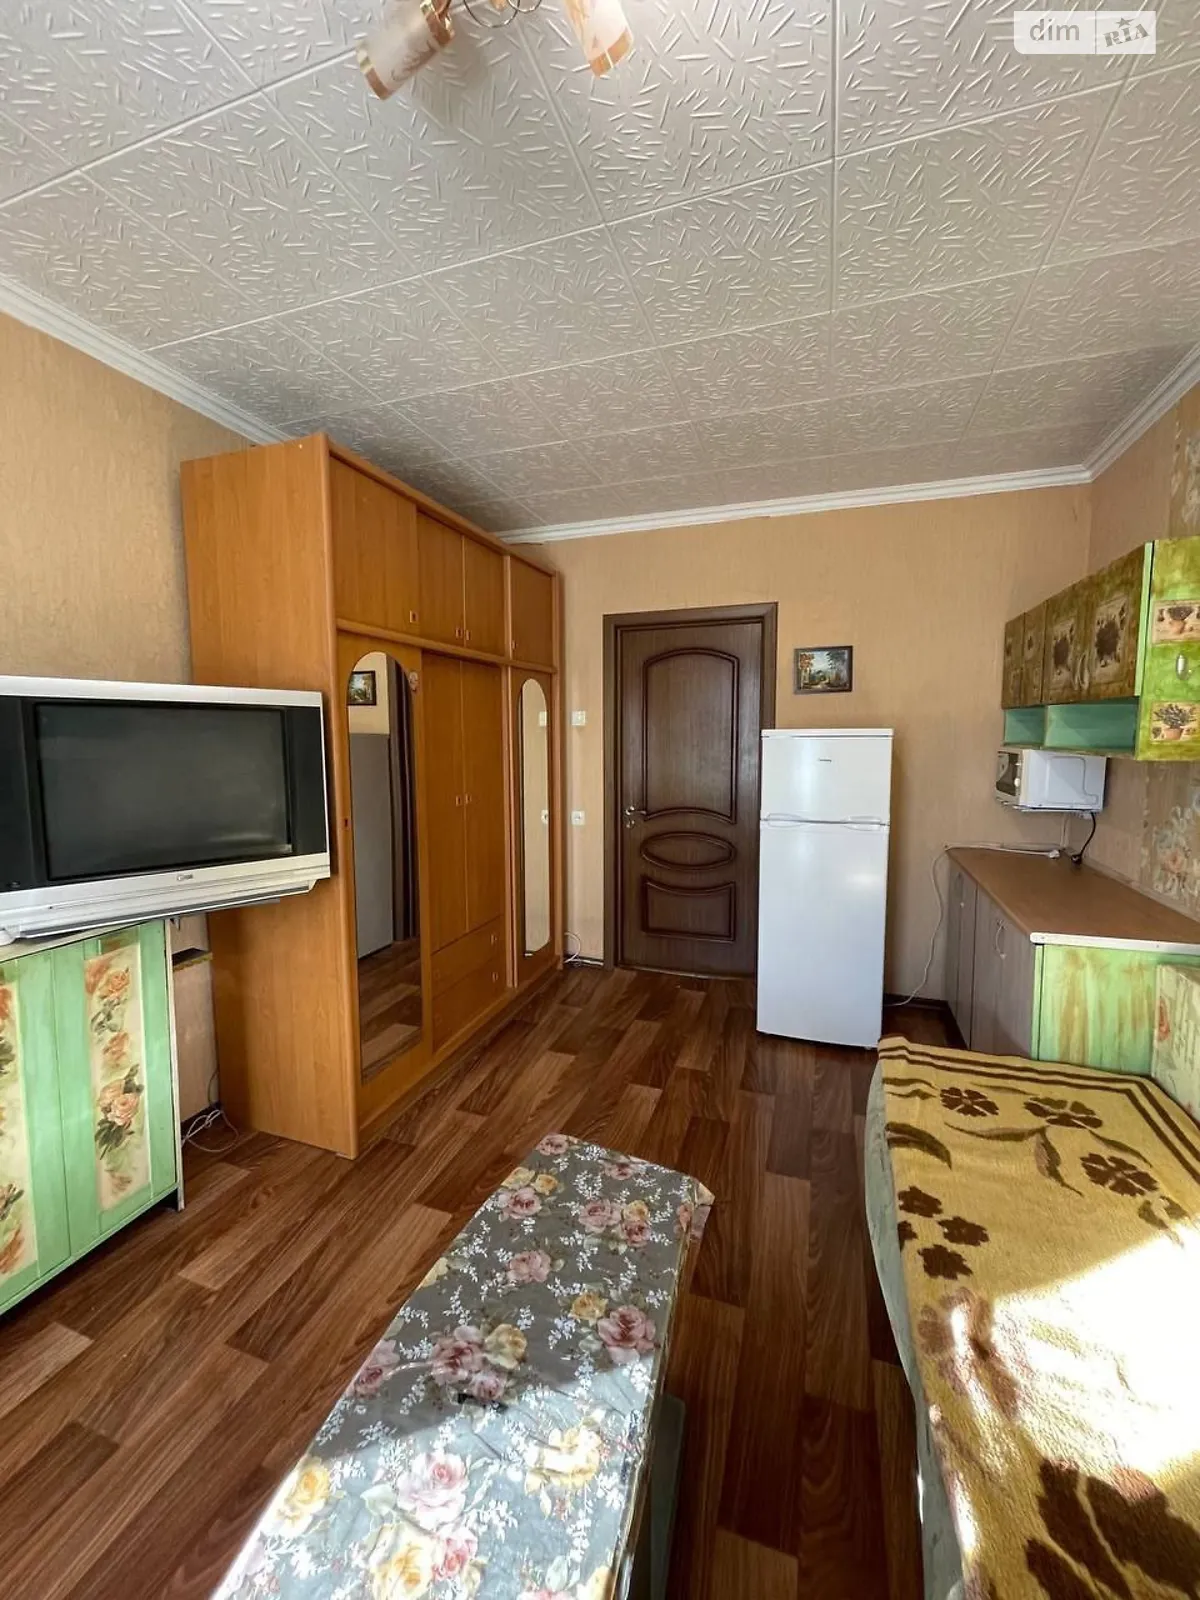 Продается комната 17.5 кв. м в Одессе, цена: 9000 $ - фото 1